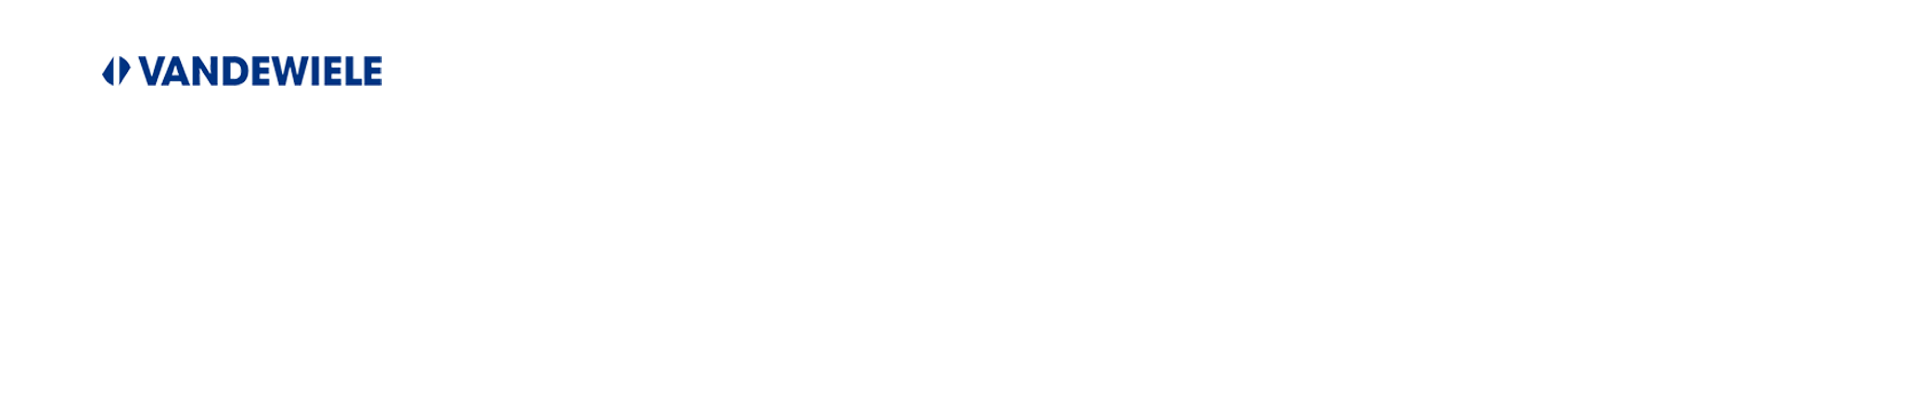 Vandewiele logo